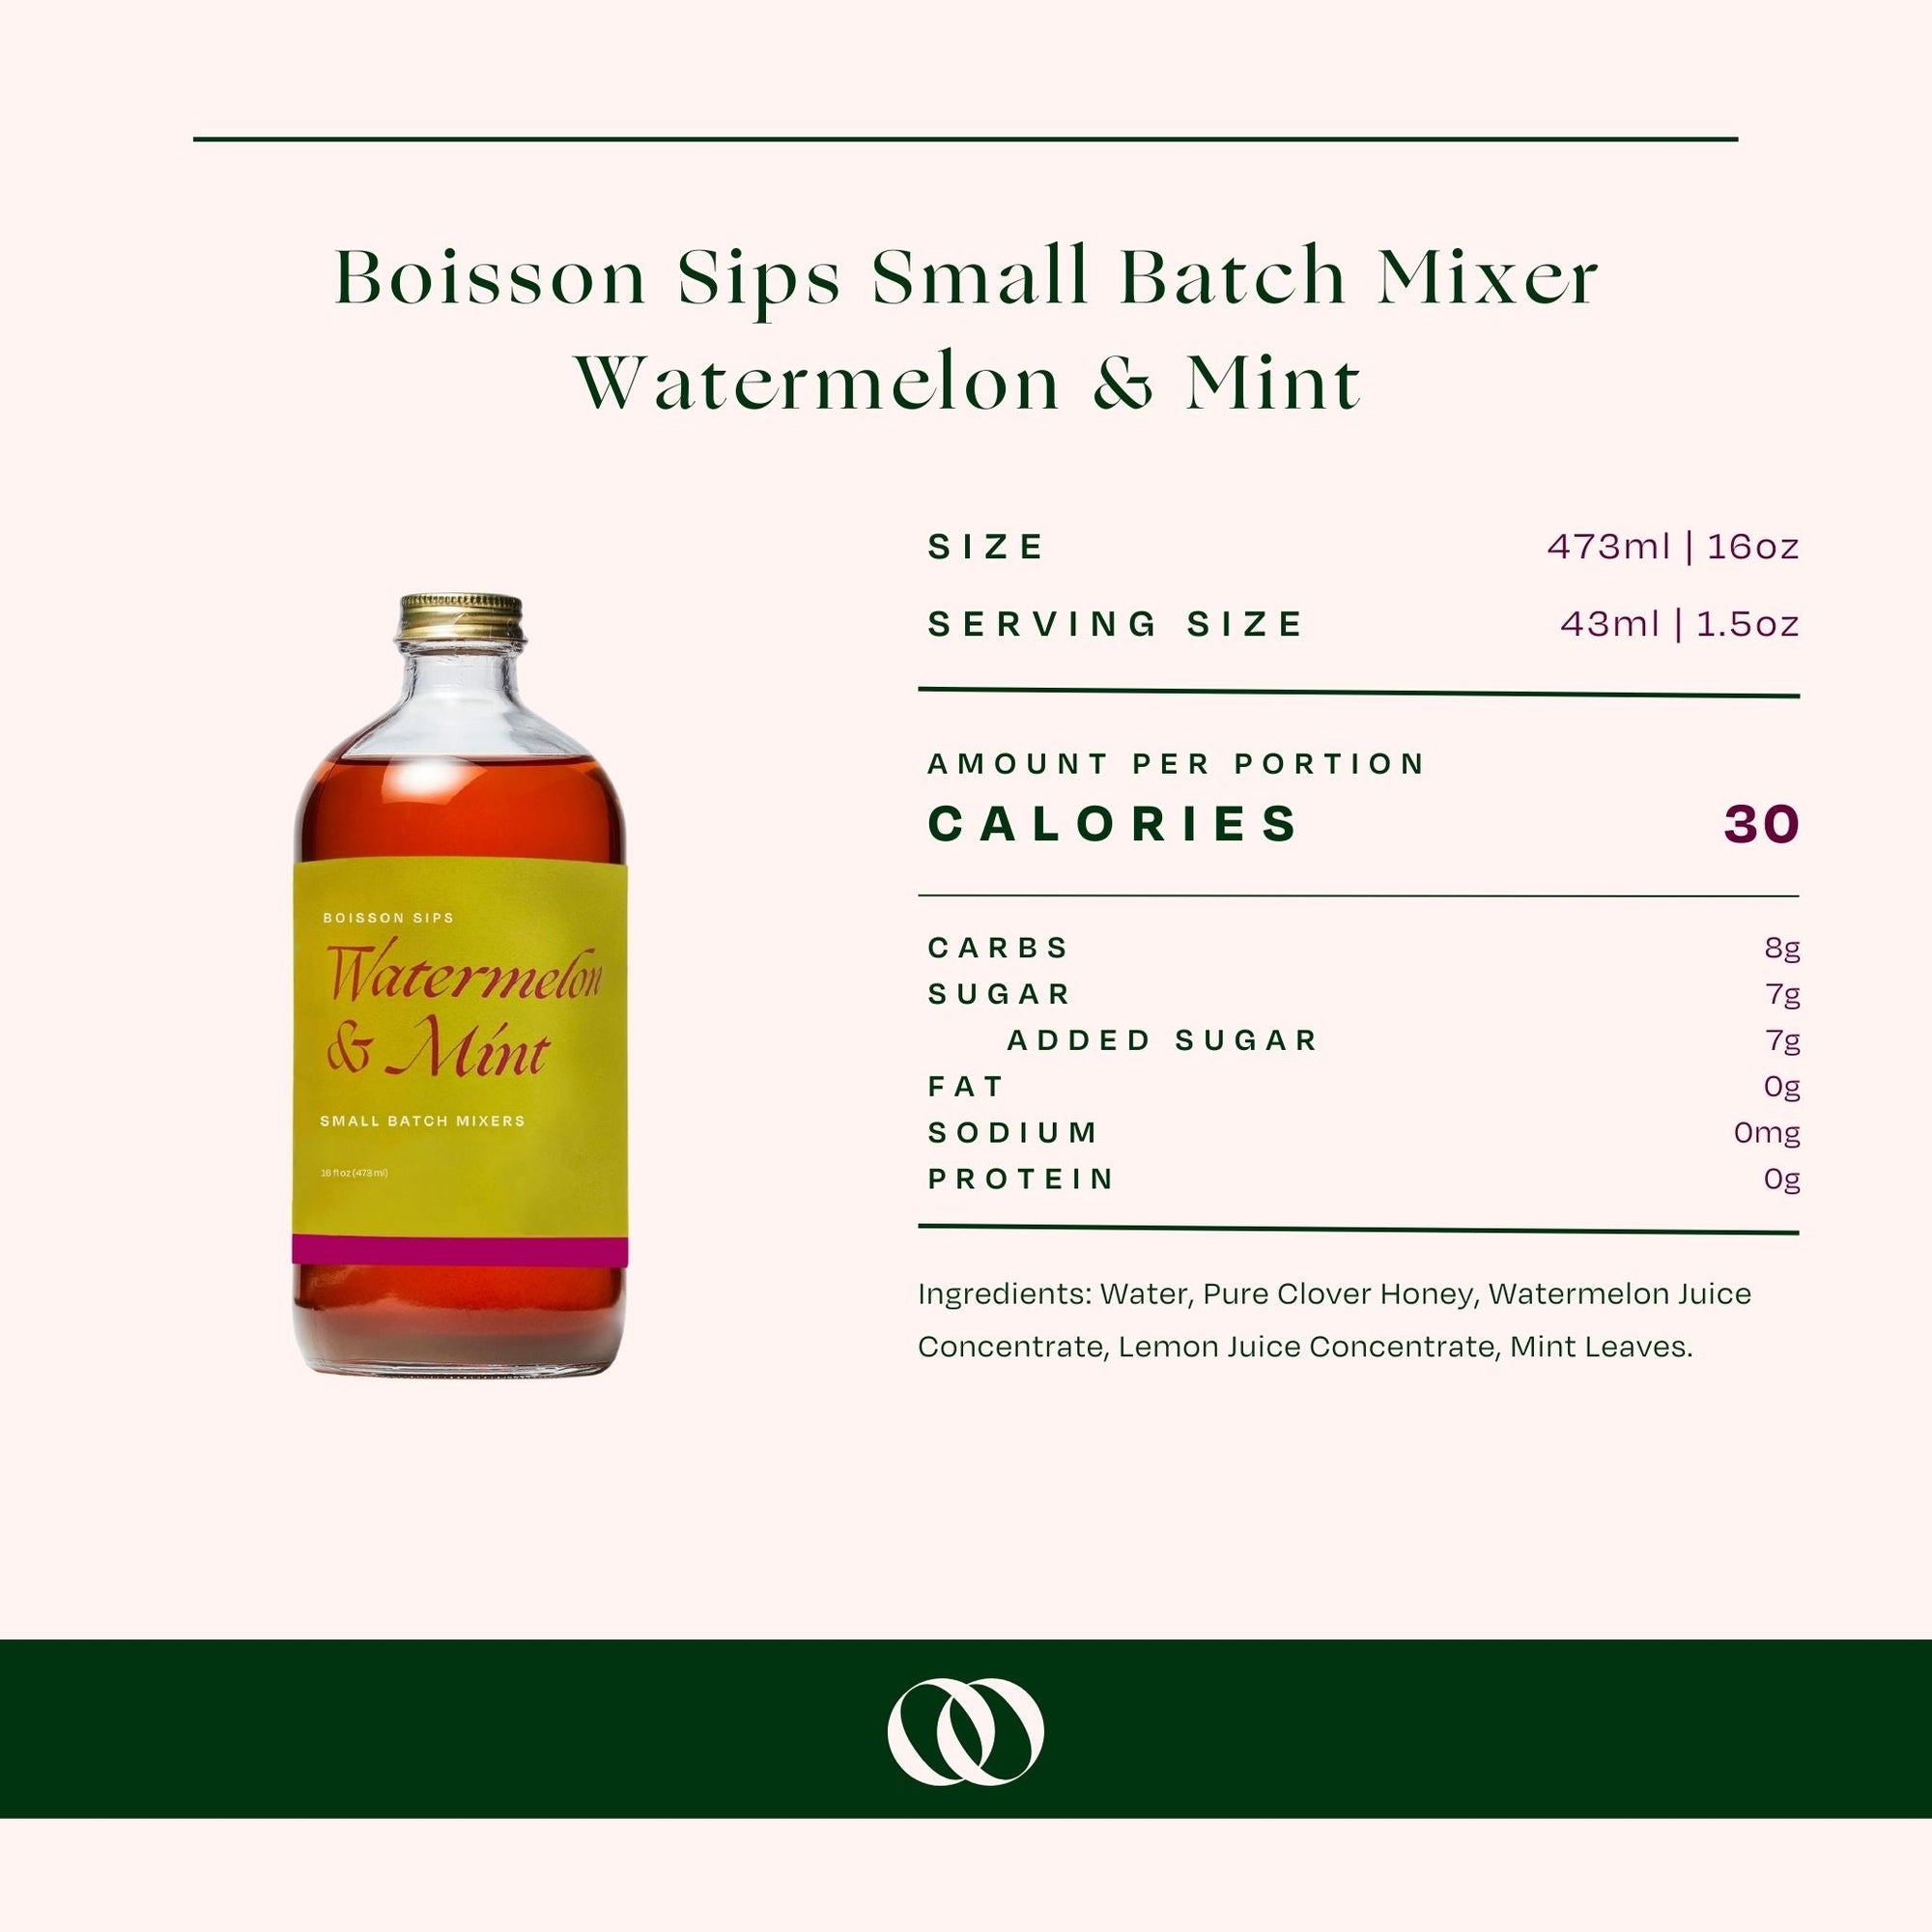 Wood Stove Kitchen - Boisson Sips Watermelon & Mint Small Batch Mixers - Boisson